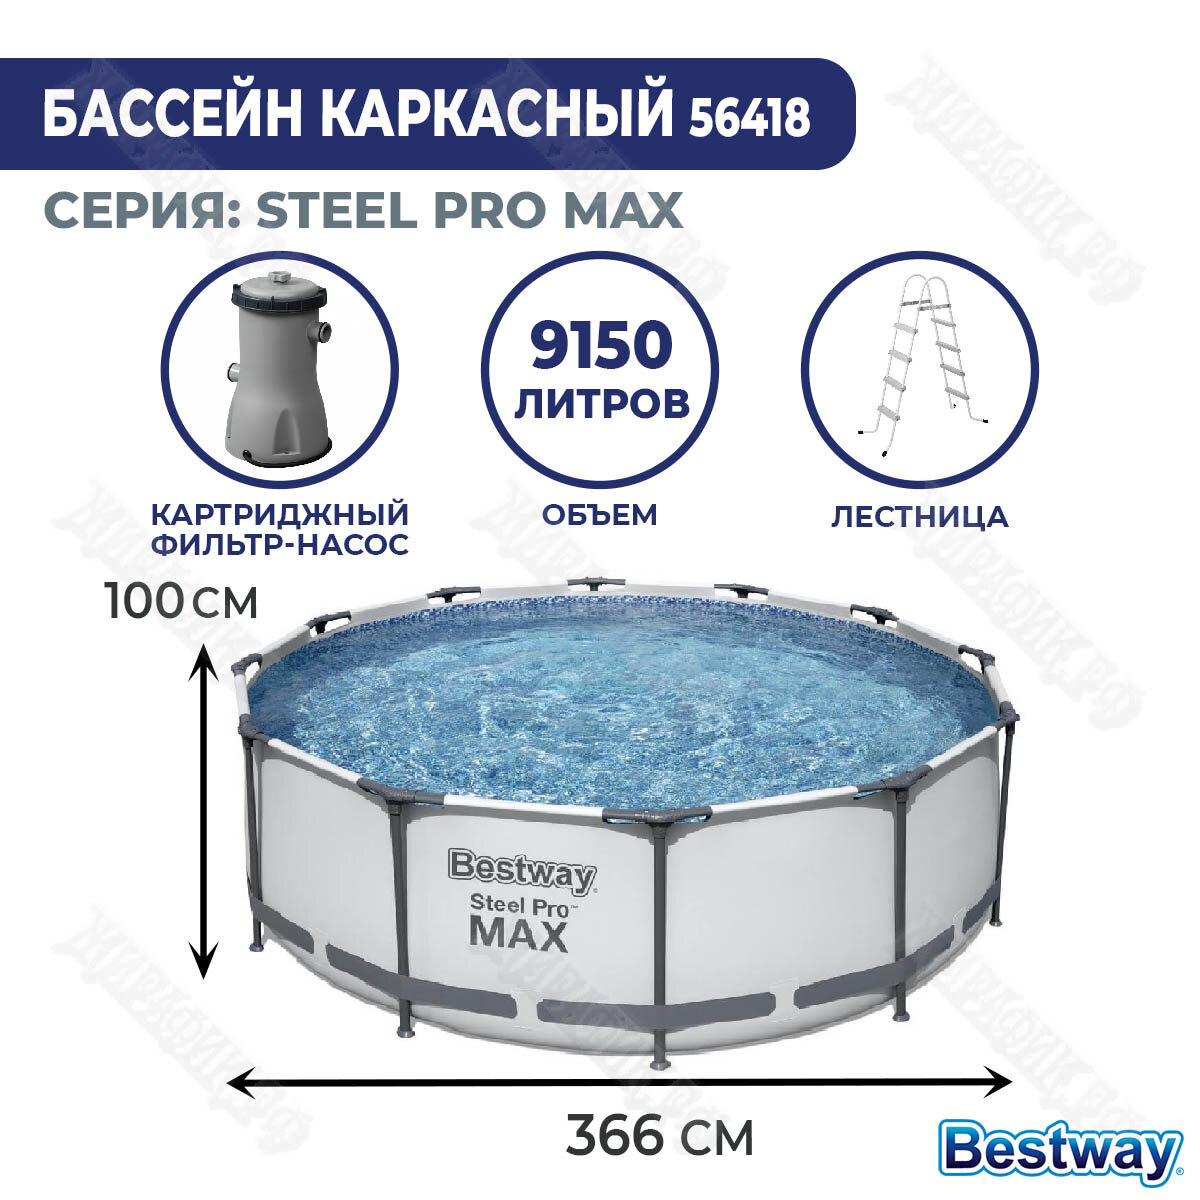 Каркасный бассейн BestWay Steel Pro Max 366x100 см 56418